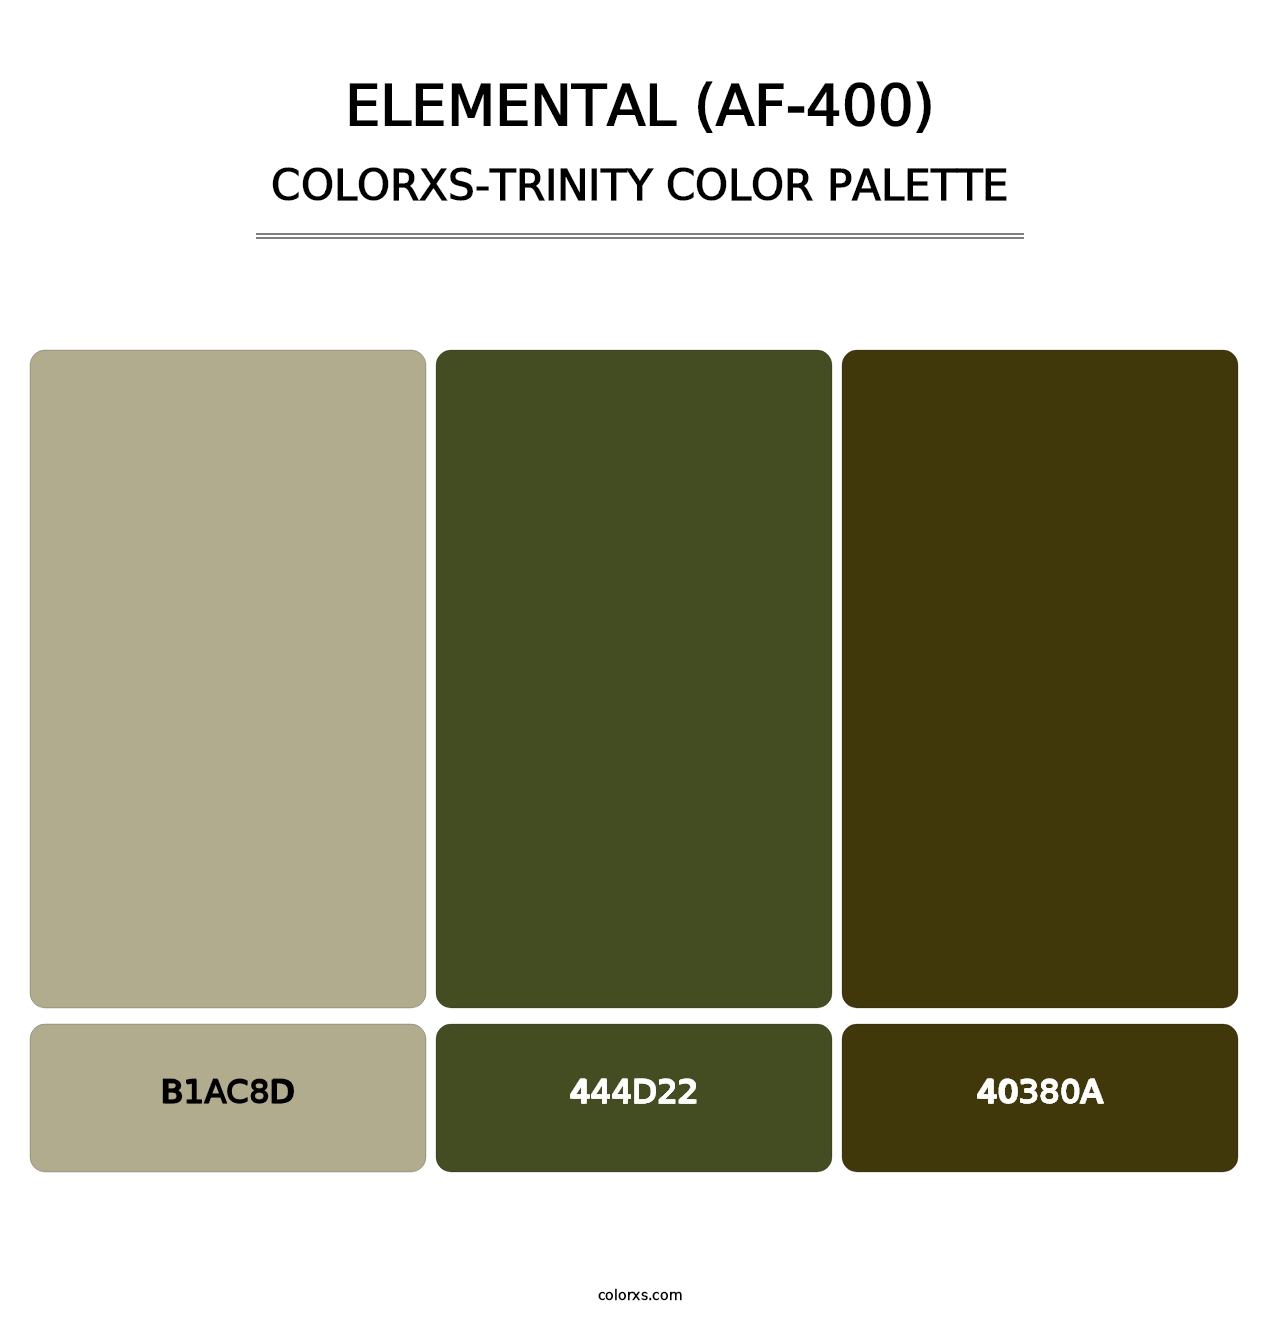 Elemental (AF-400) - Colorxs Trinity Palette